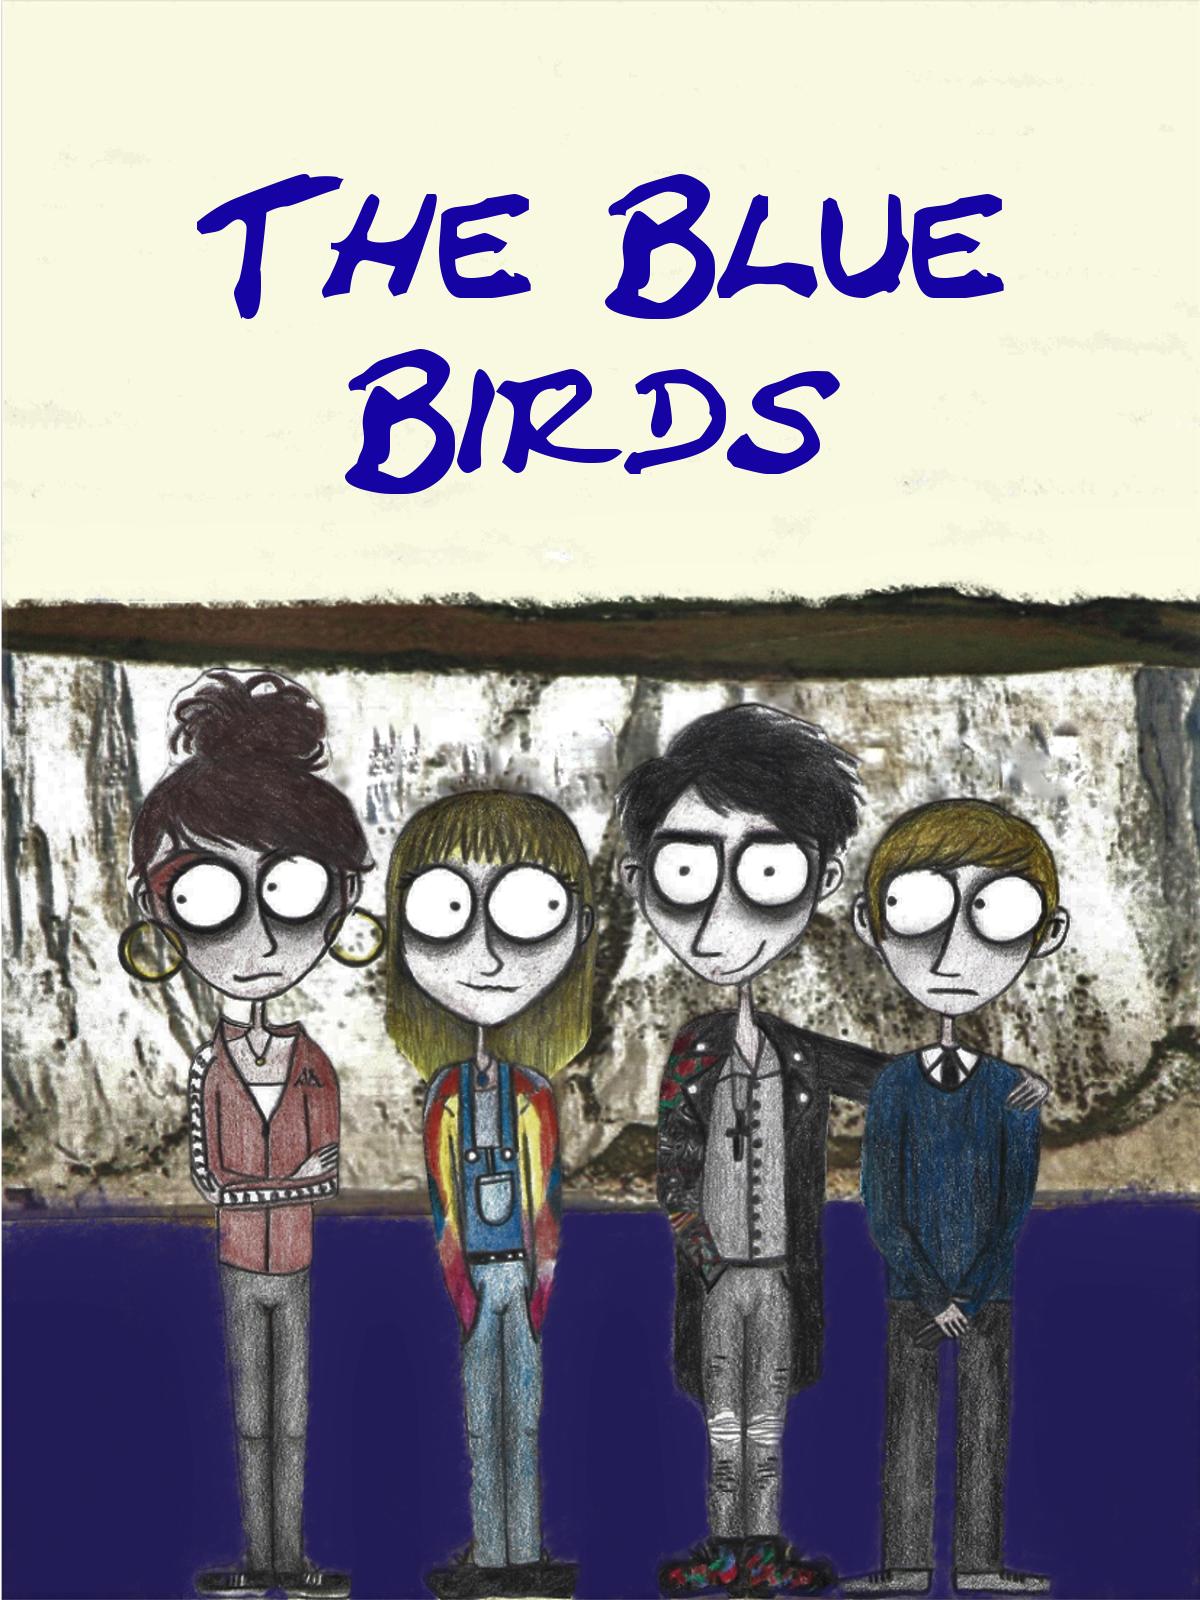 The Blue Birds (2020)